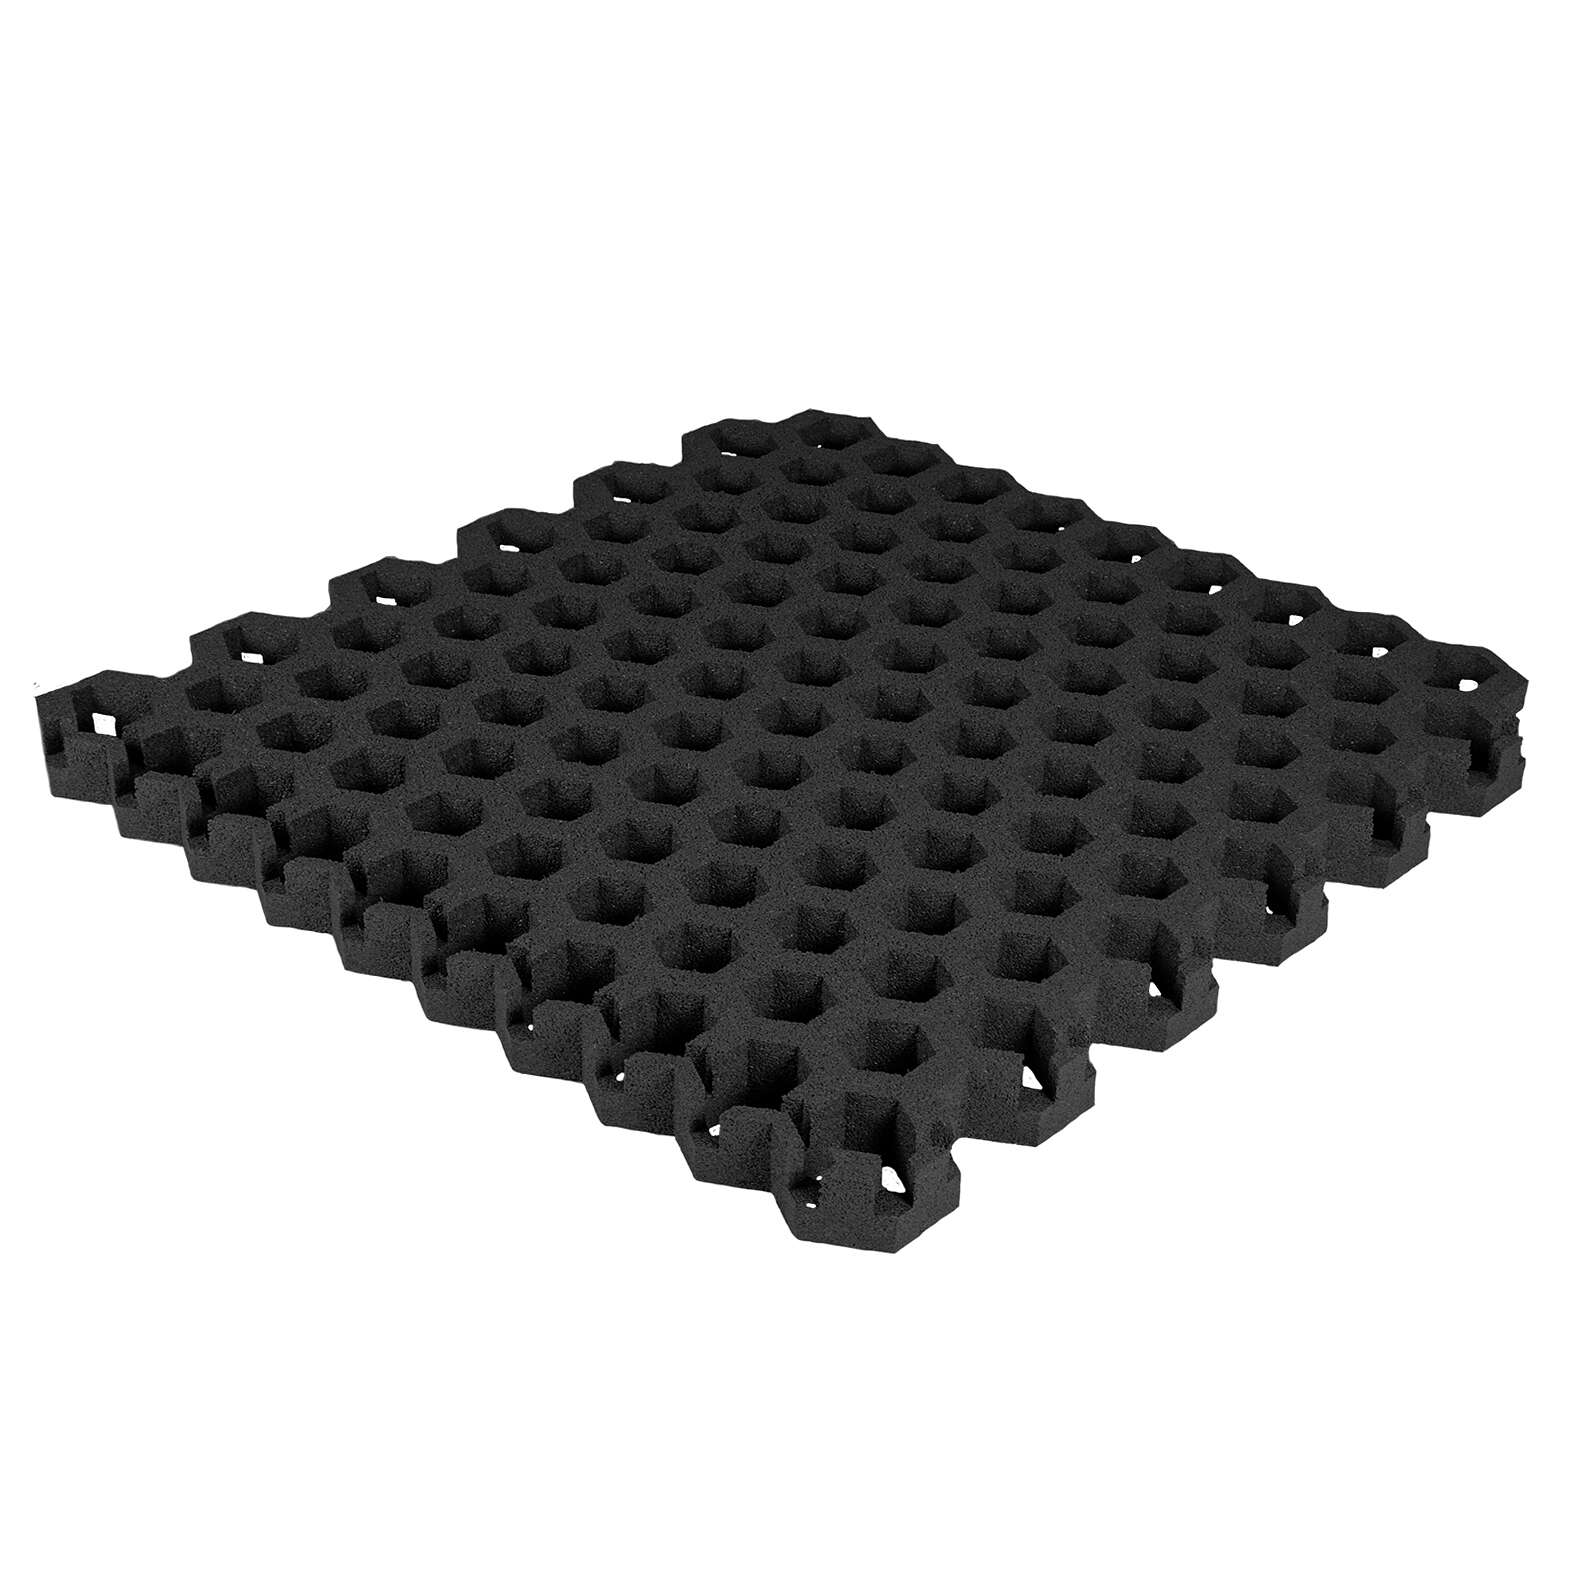 Gum-tech Rasengitter "Hexagon", Schwarz, 4,5 cm von Gum-Tech